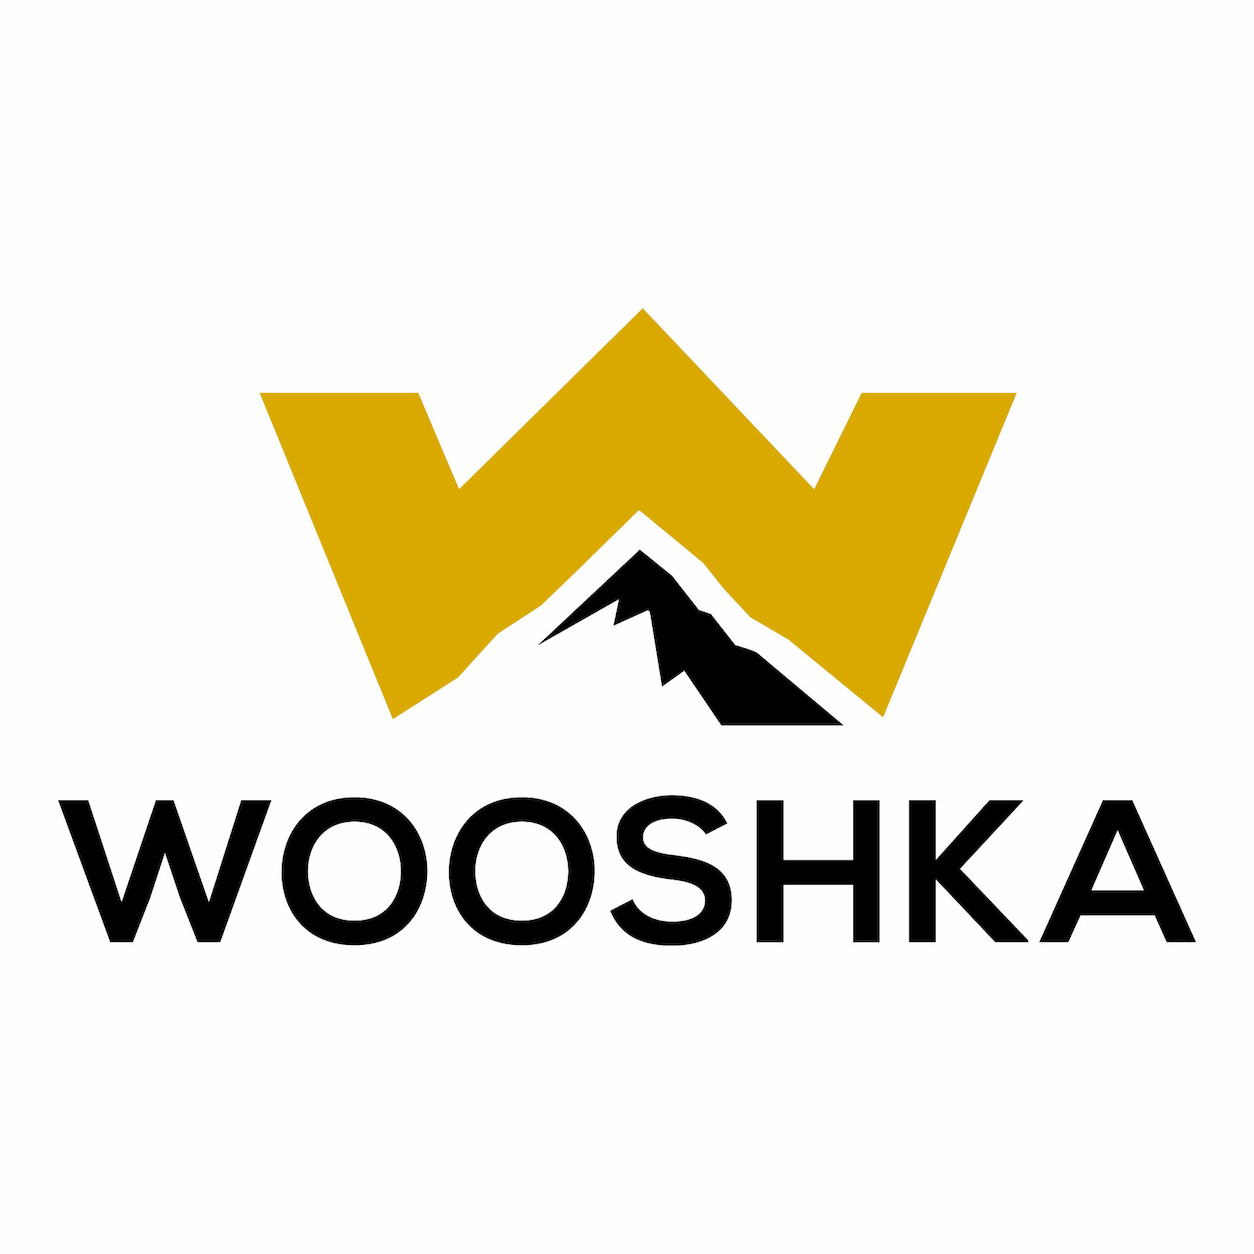 Wooshka logo